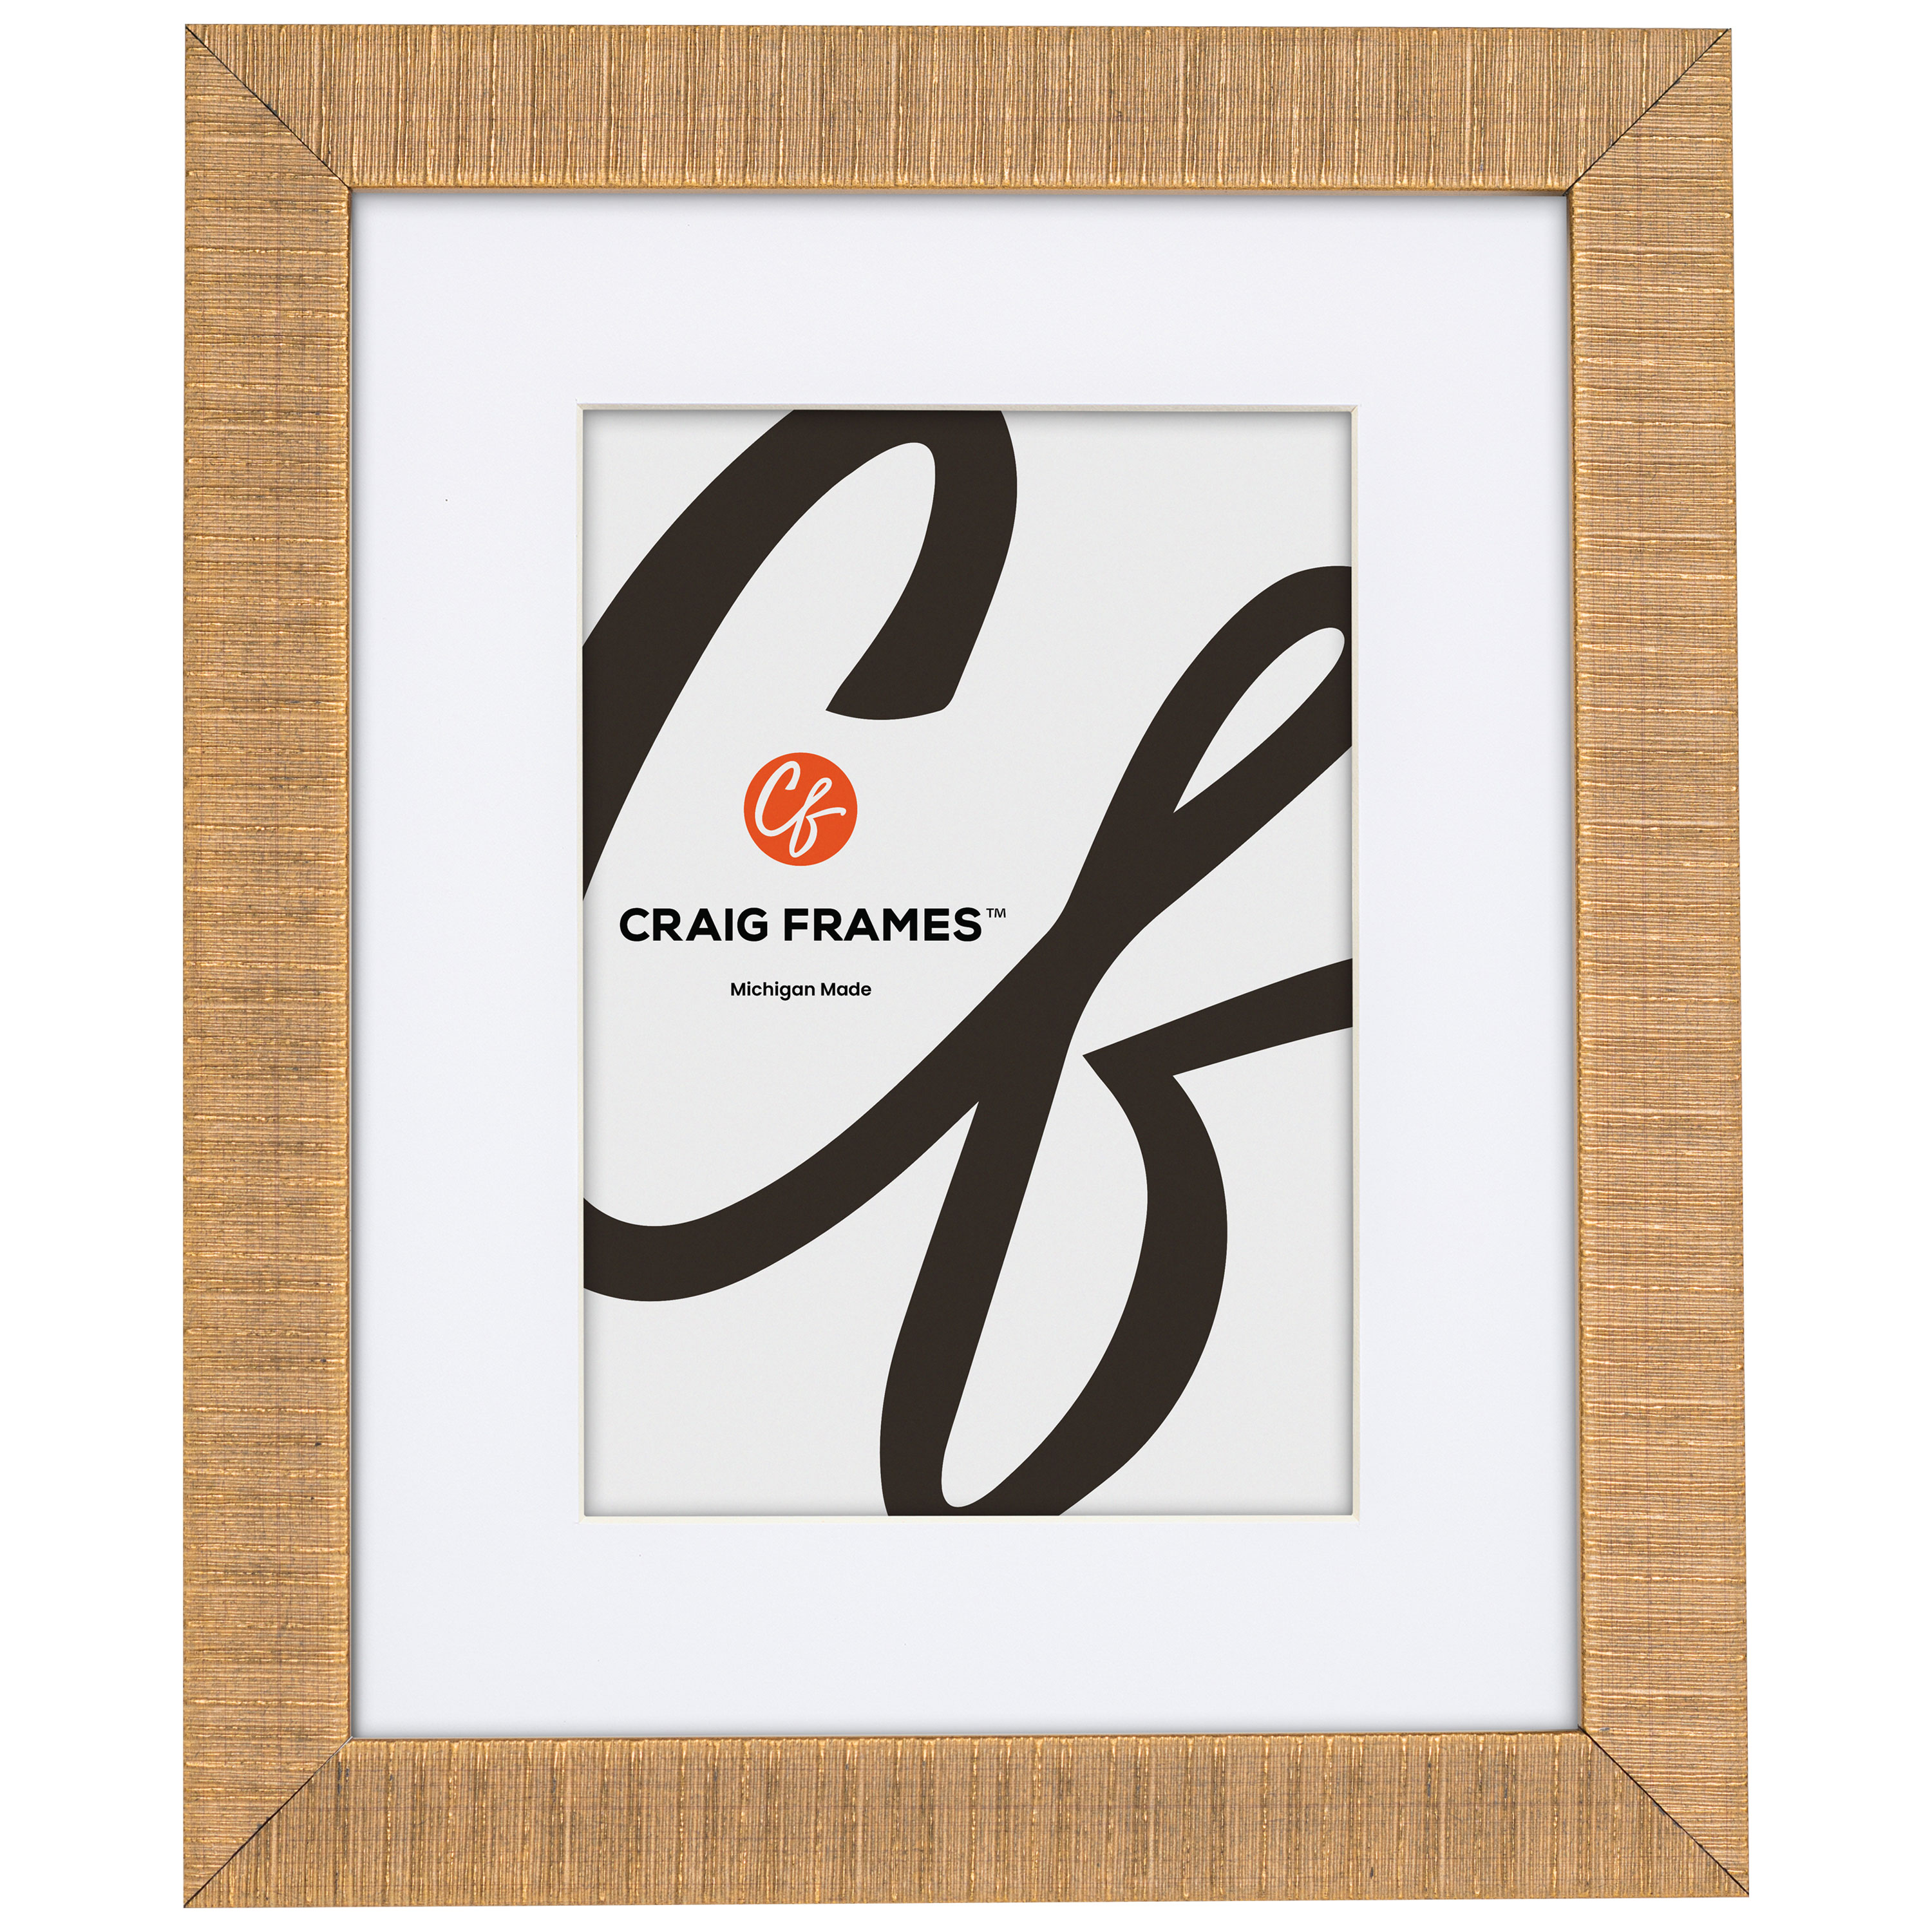 Matted Frames  Frames with Matting - Craig Frames